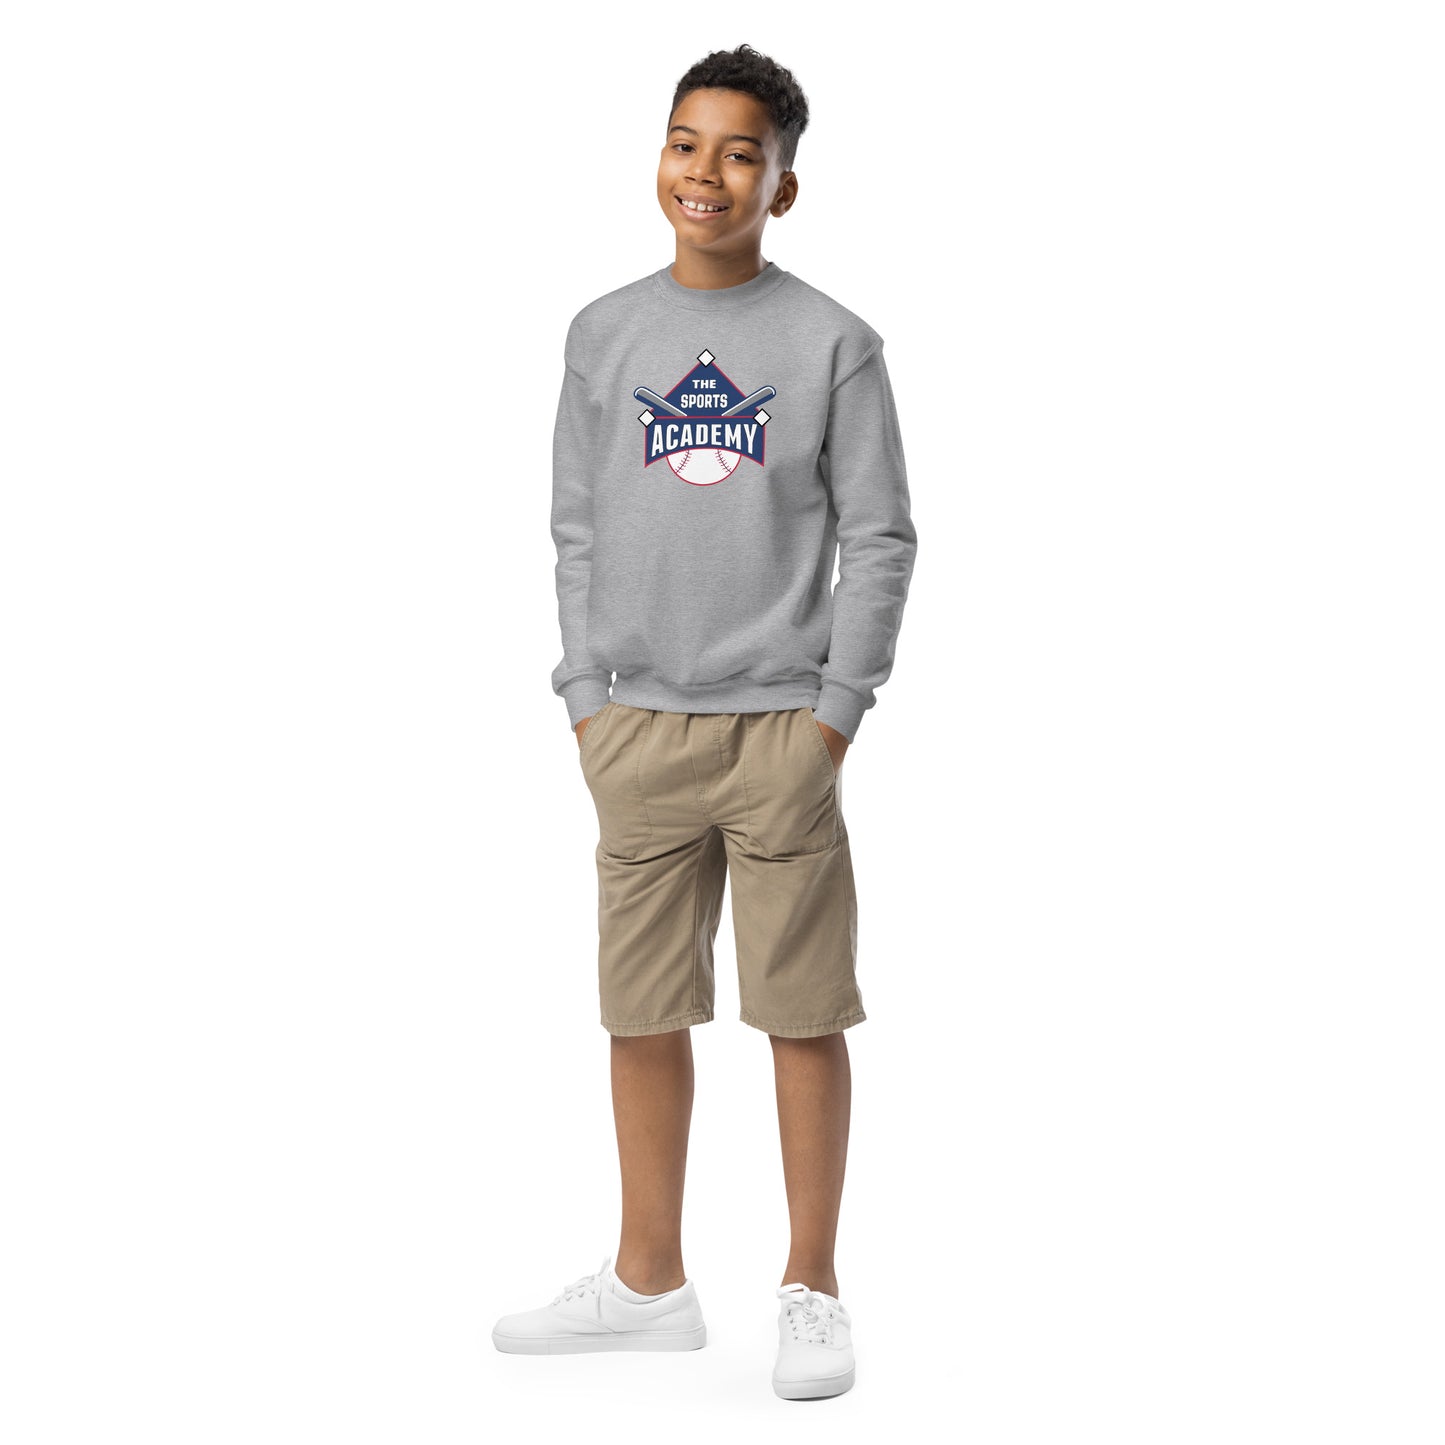 The Sports Academy Youth crewneck sweatshirt